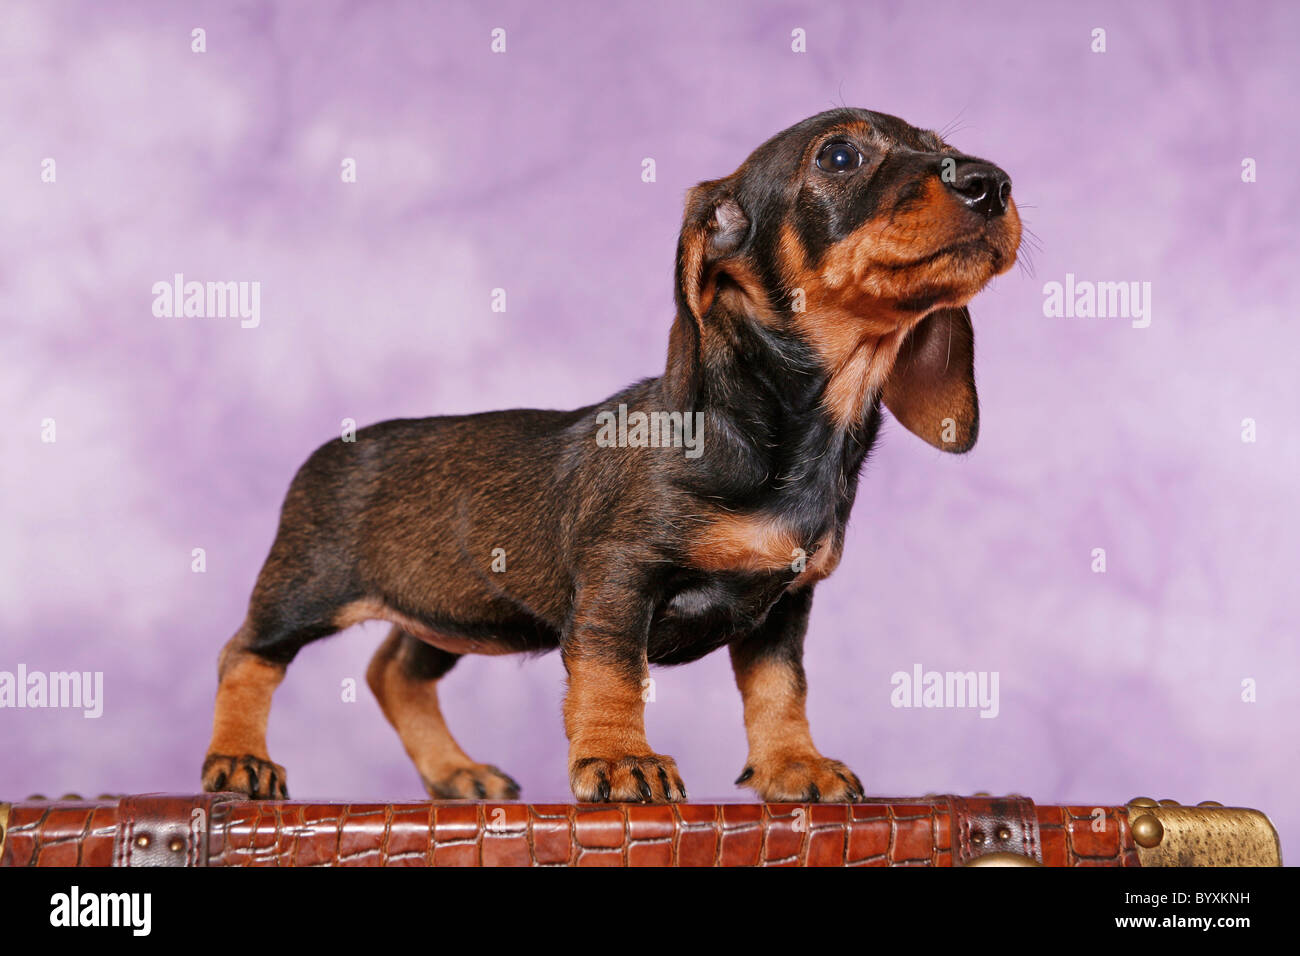 Rauhaardackel Welpe / Teckel Puppy Stock Photo